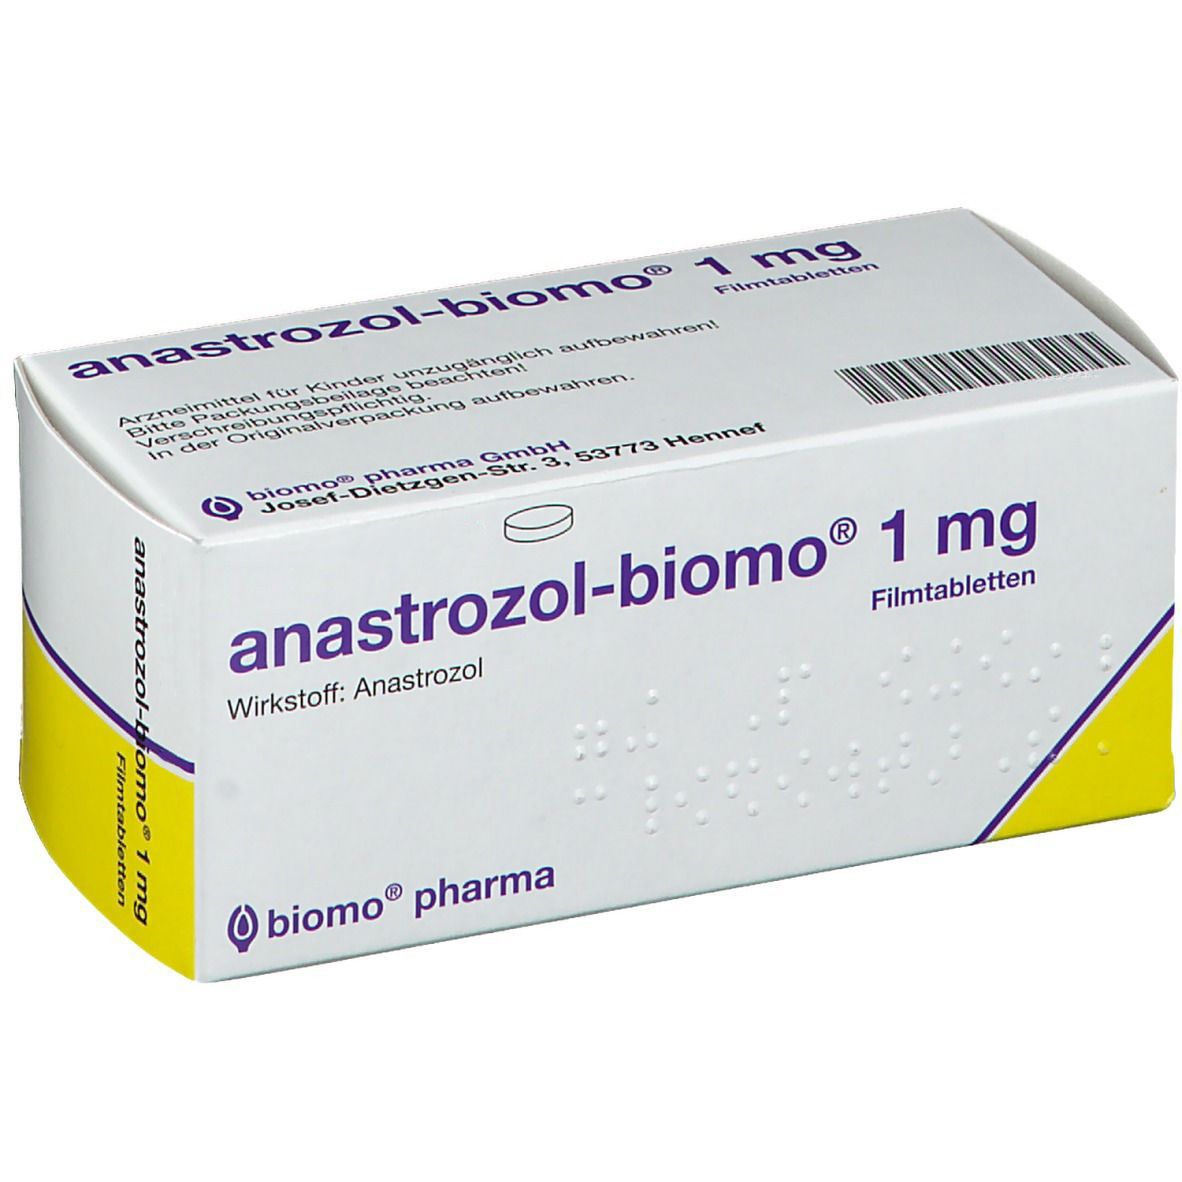 Anastrozol biomo 1 mg Filmtabletten